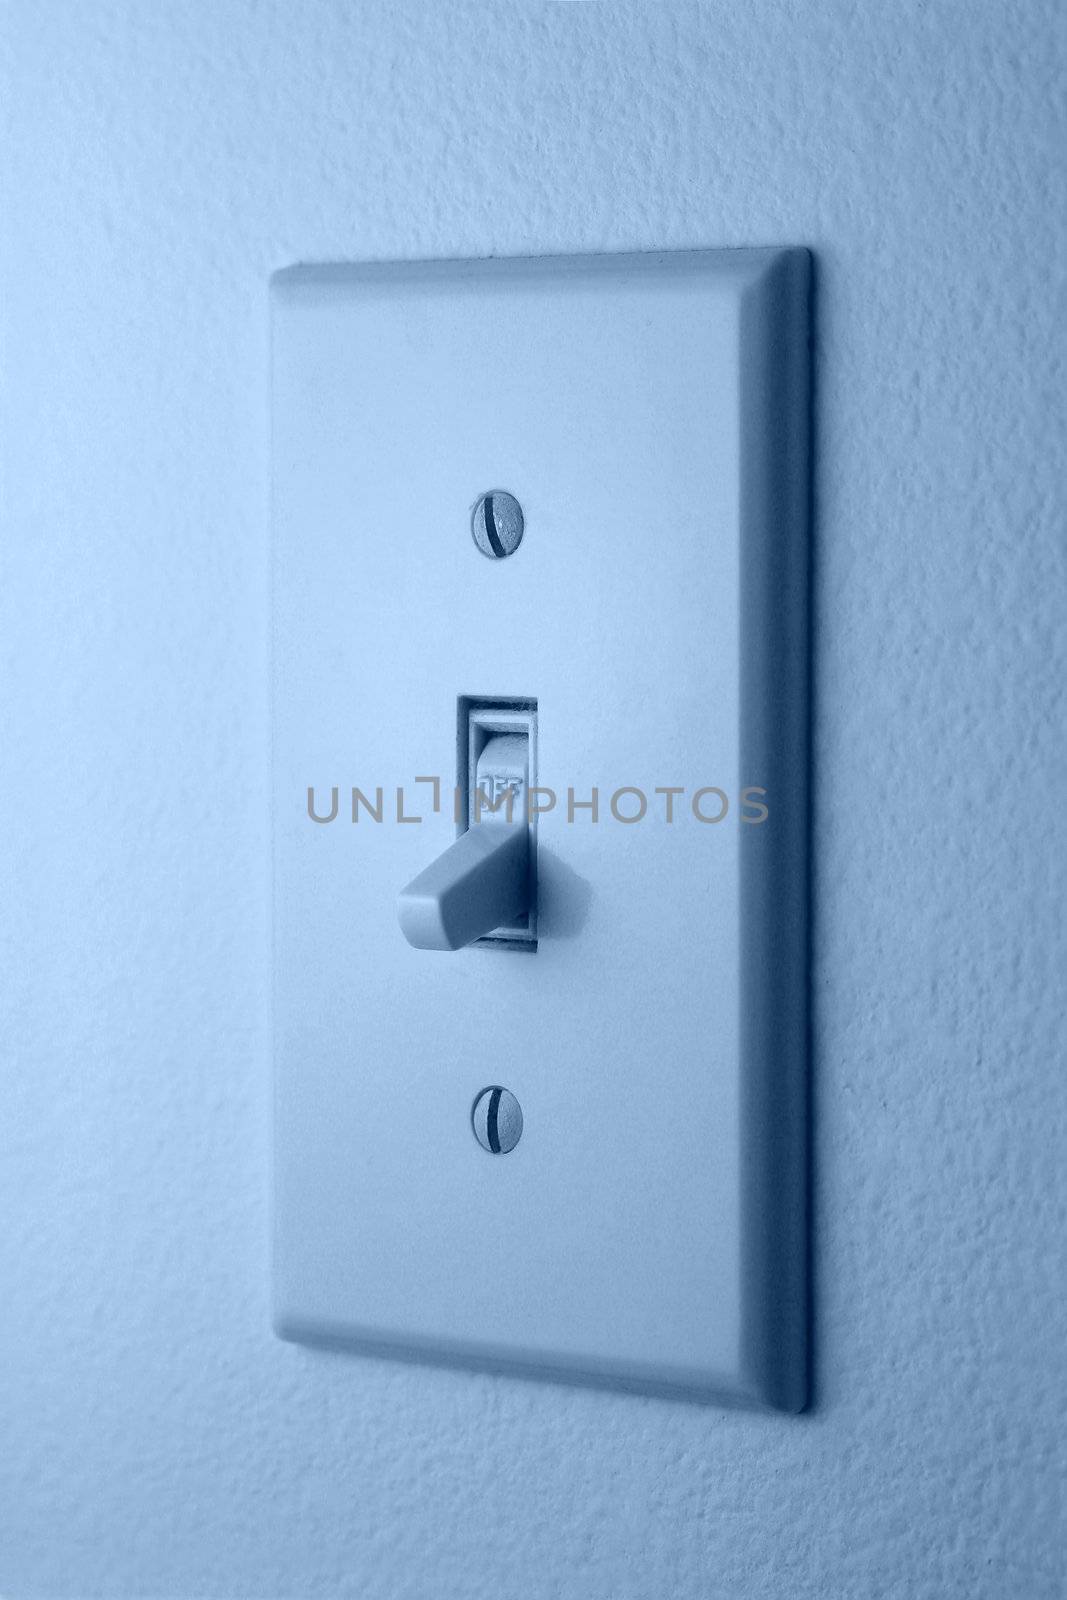 Light switch by Geoarts